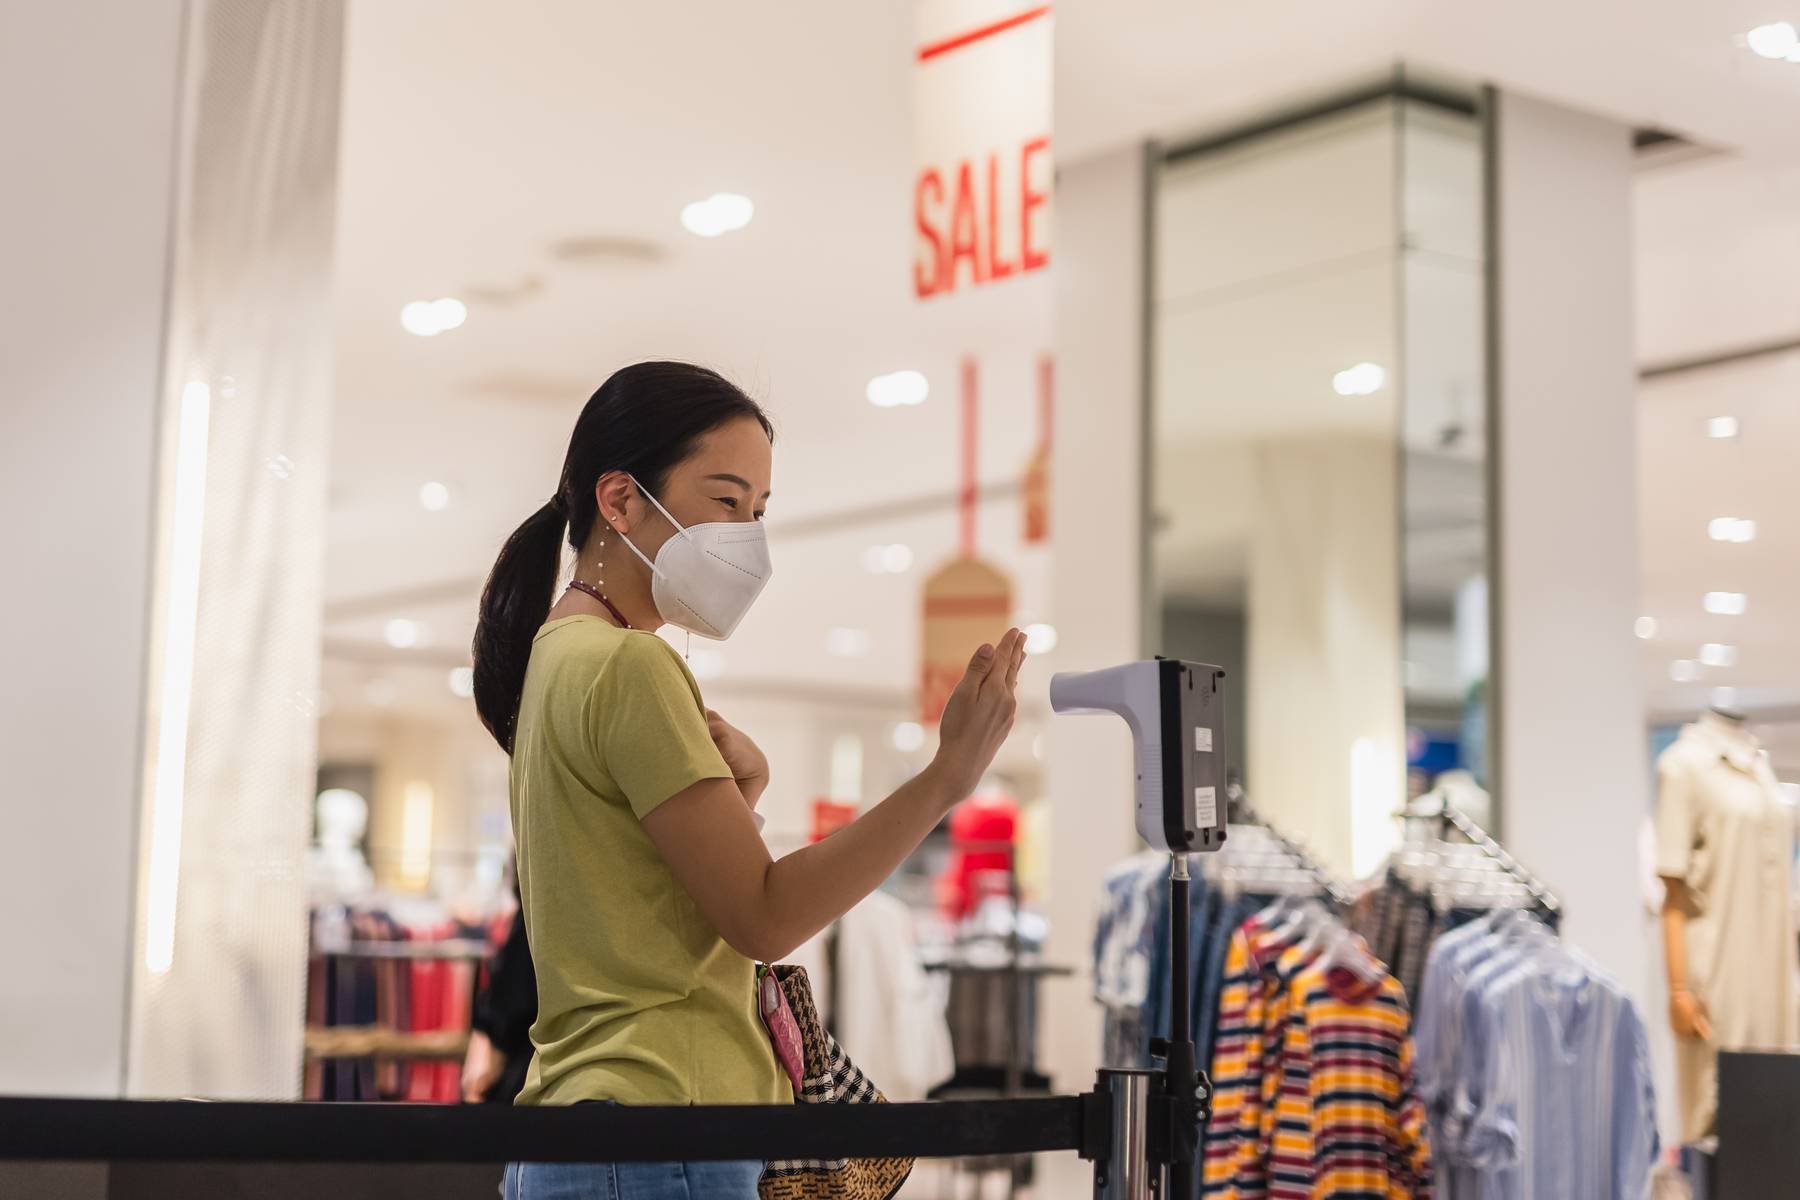 A shopper wearing a mask. Shutterstock